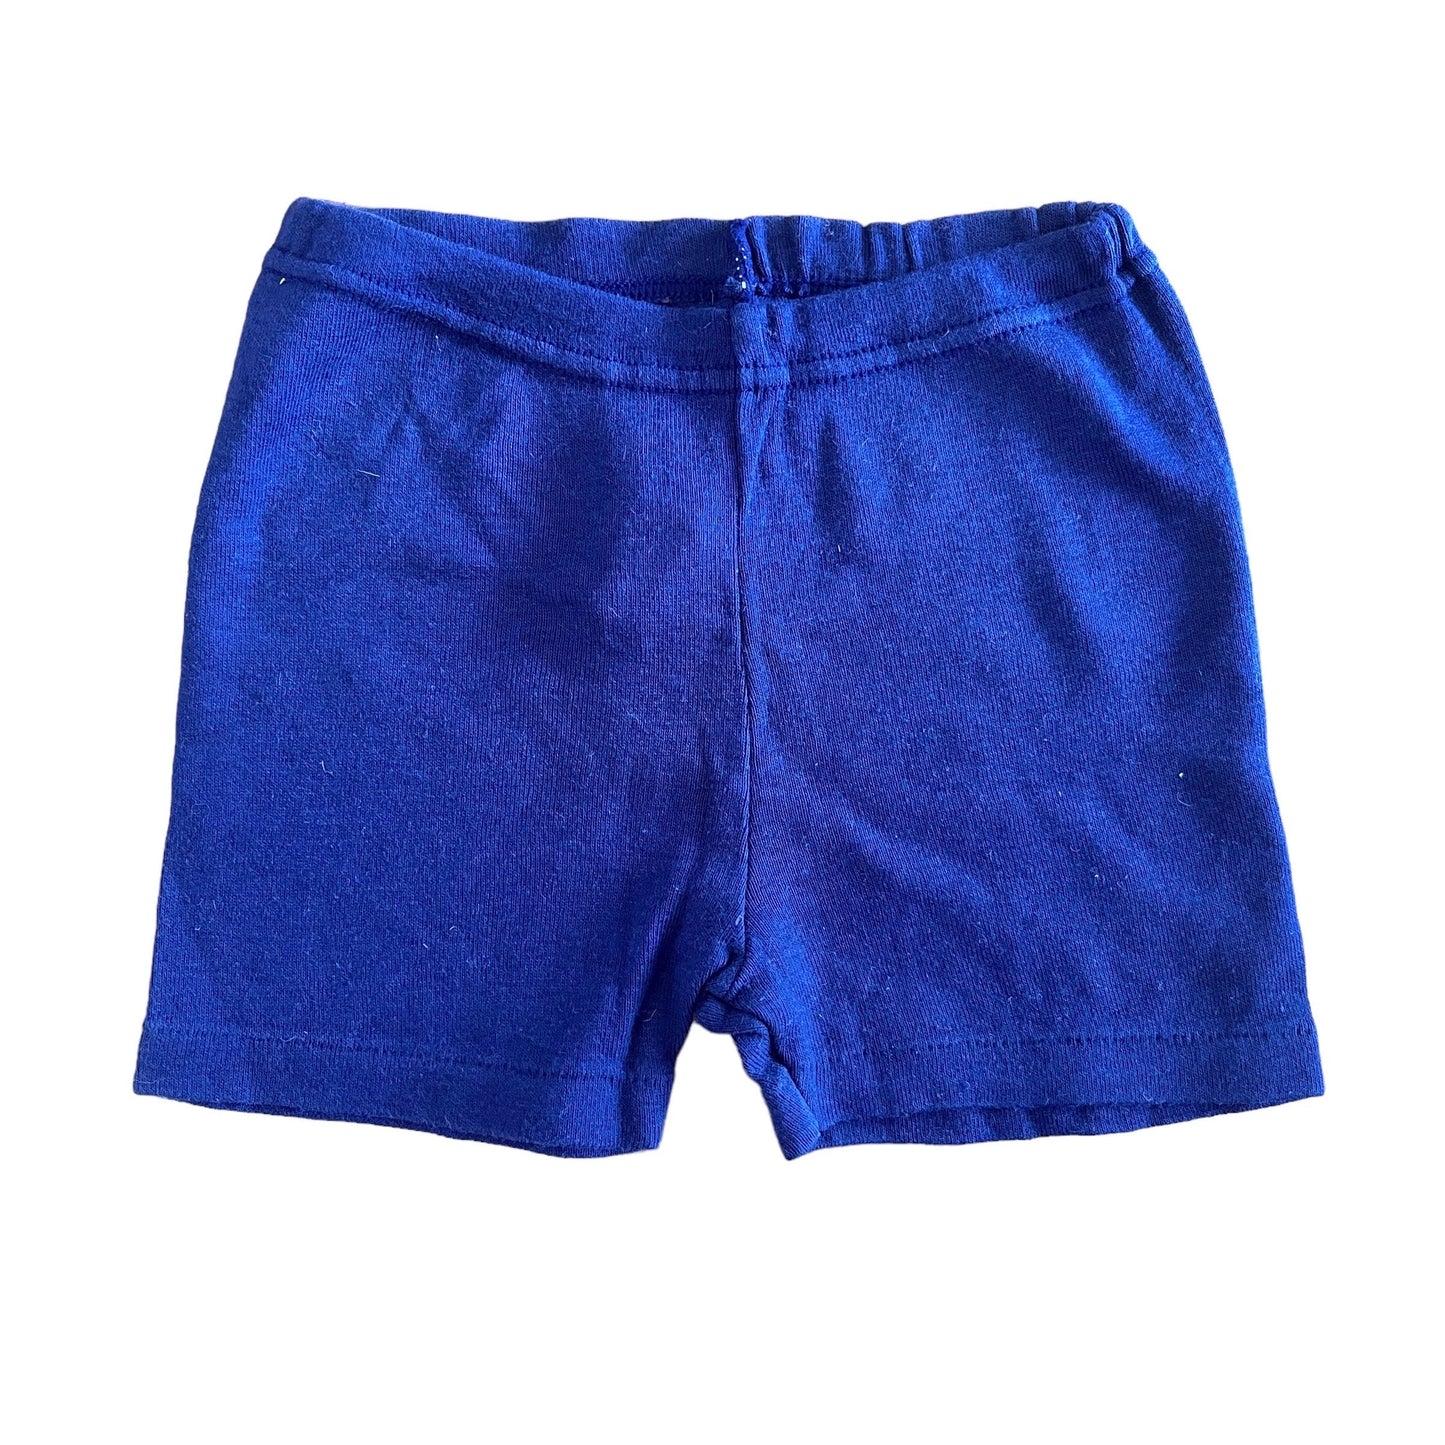 Vintage 70's Navy / Cotton Shorts / Pants / Underwear 0-6M